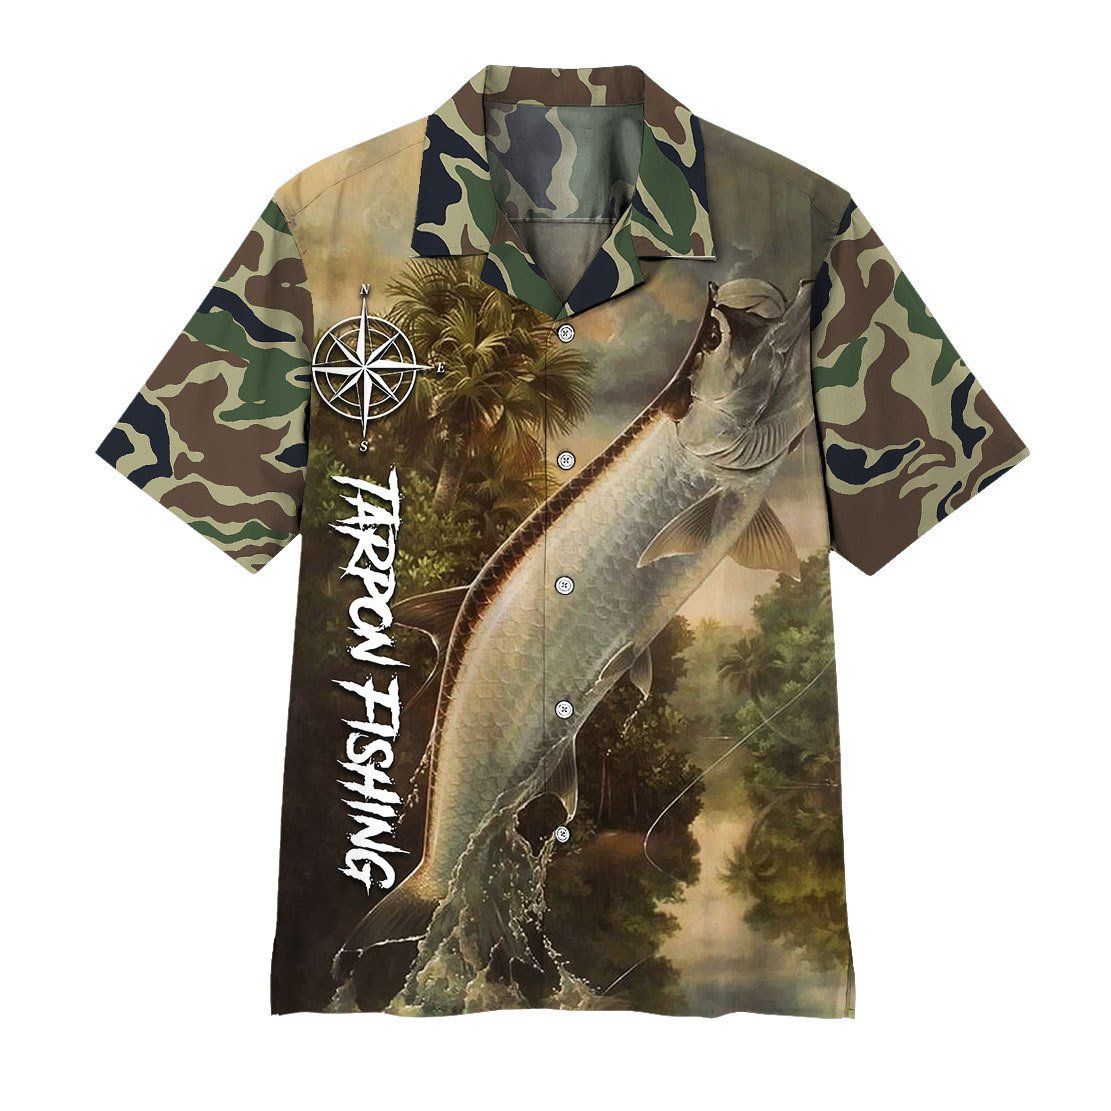 Tarpon Fishing Hawaii Shirt